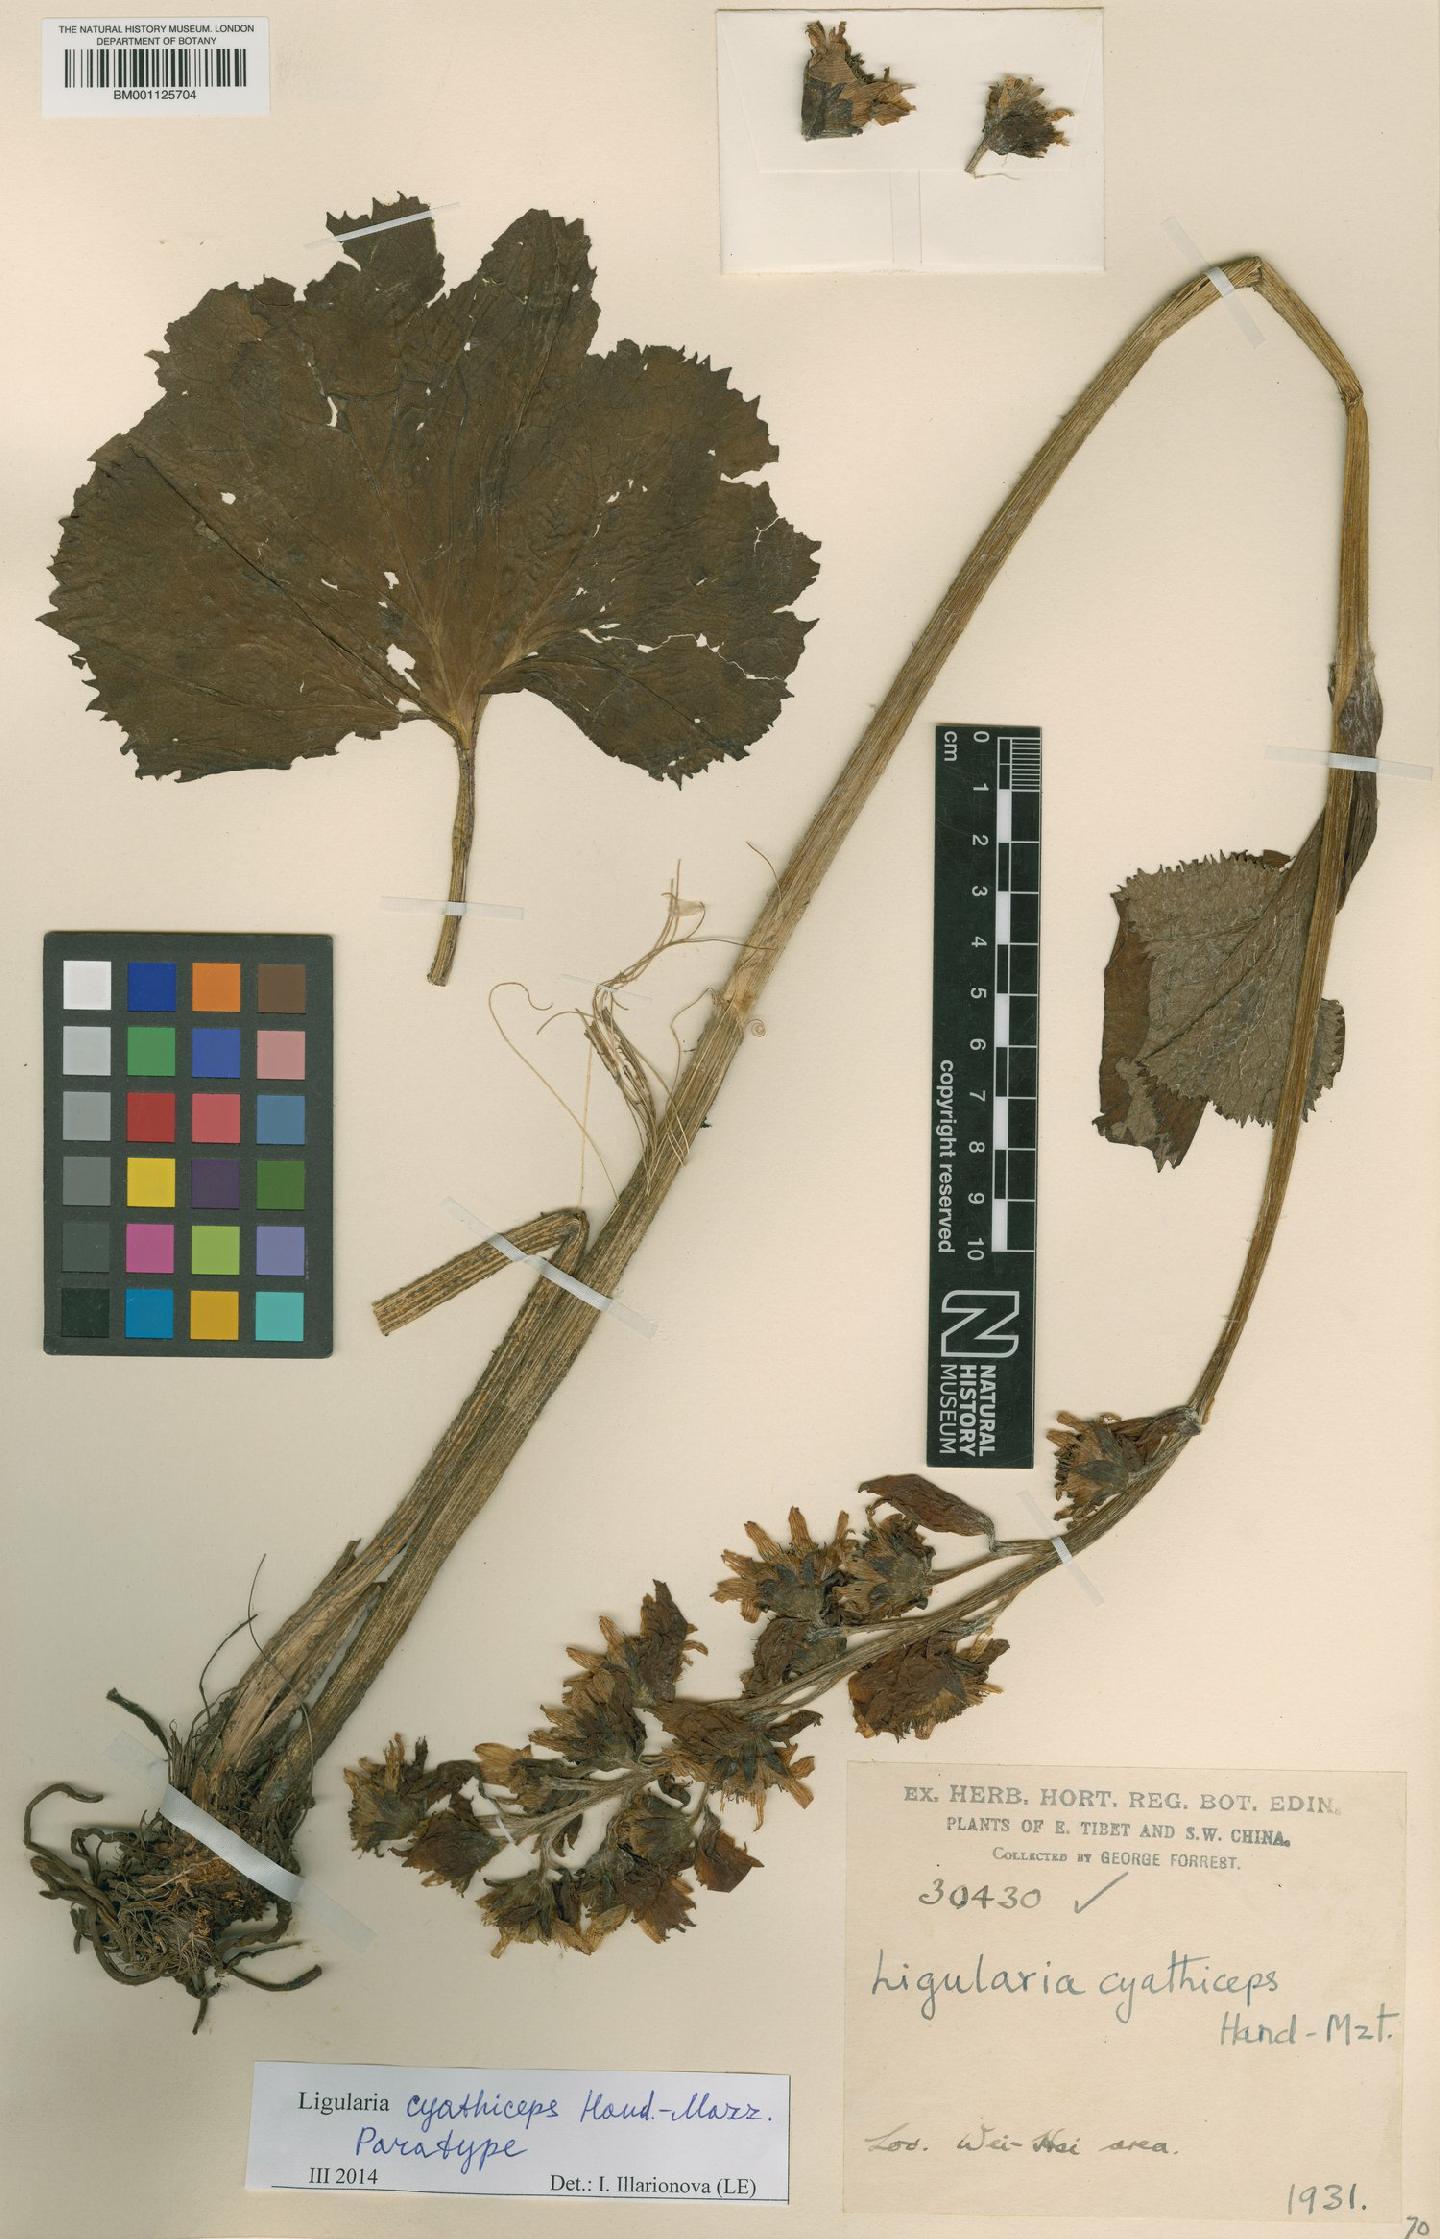 To NHMUK collection (Ligularia cyathiceps Hand.-Mazz.; Paratype; NHMUK:ecatalogue:3098950)